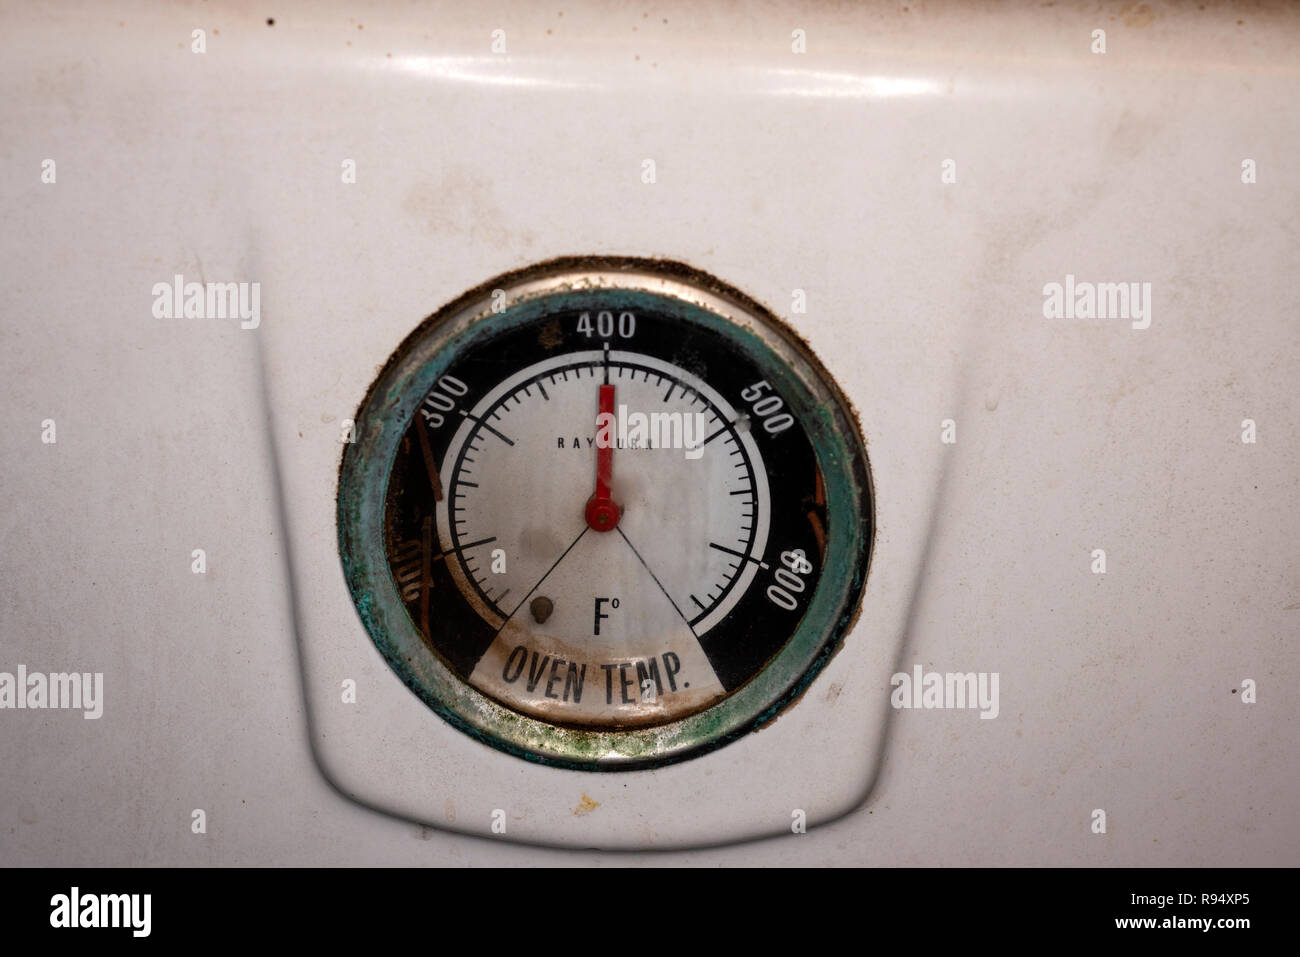 Rayburn oven temperature meter Stock Photo